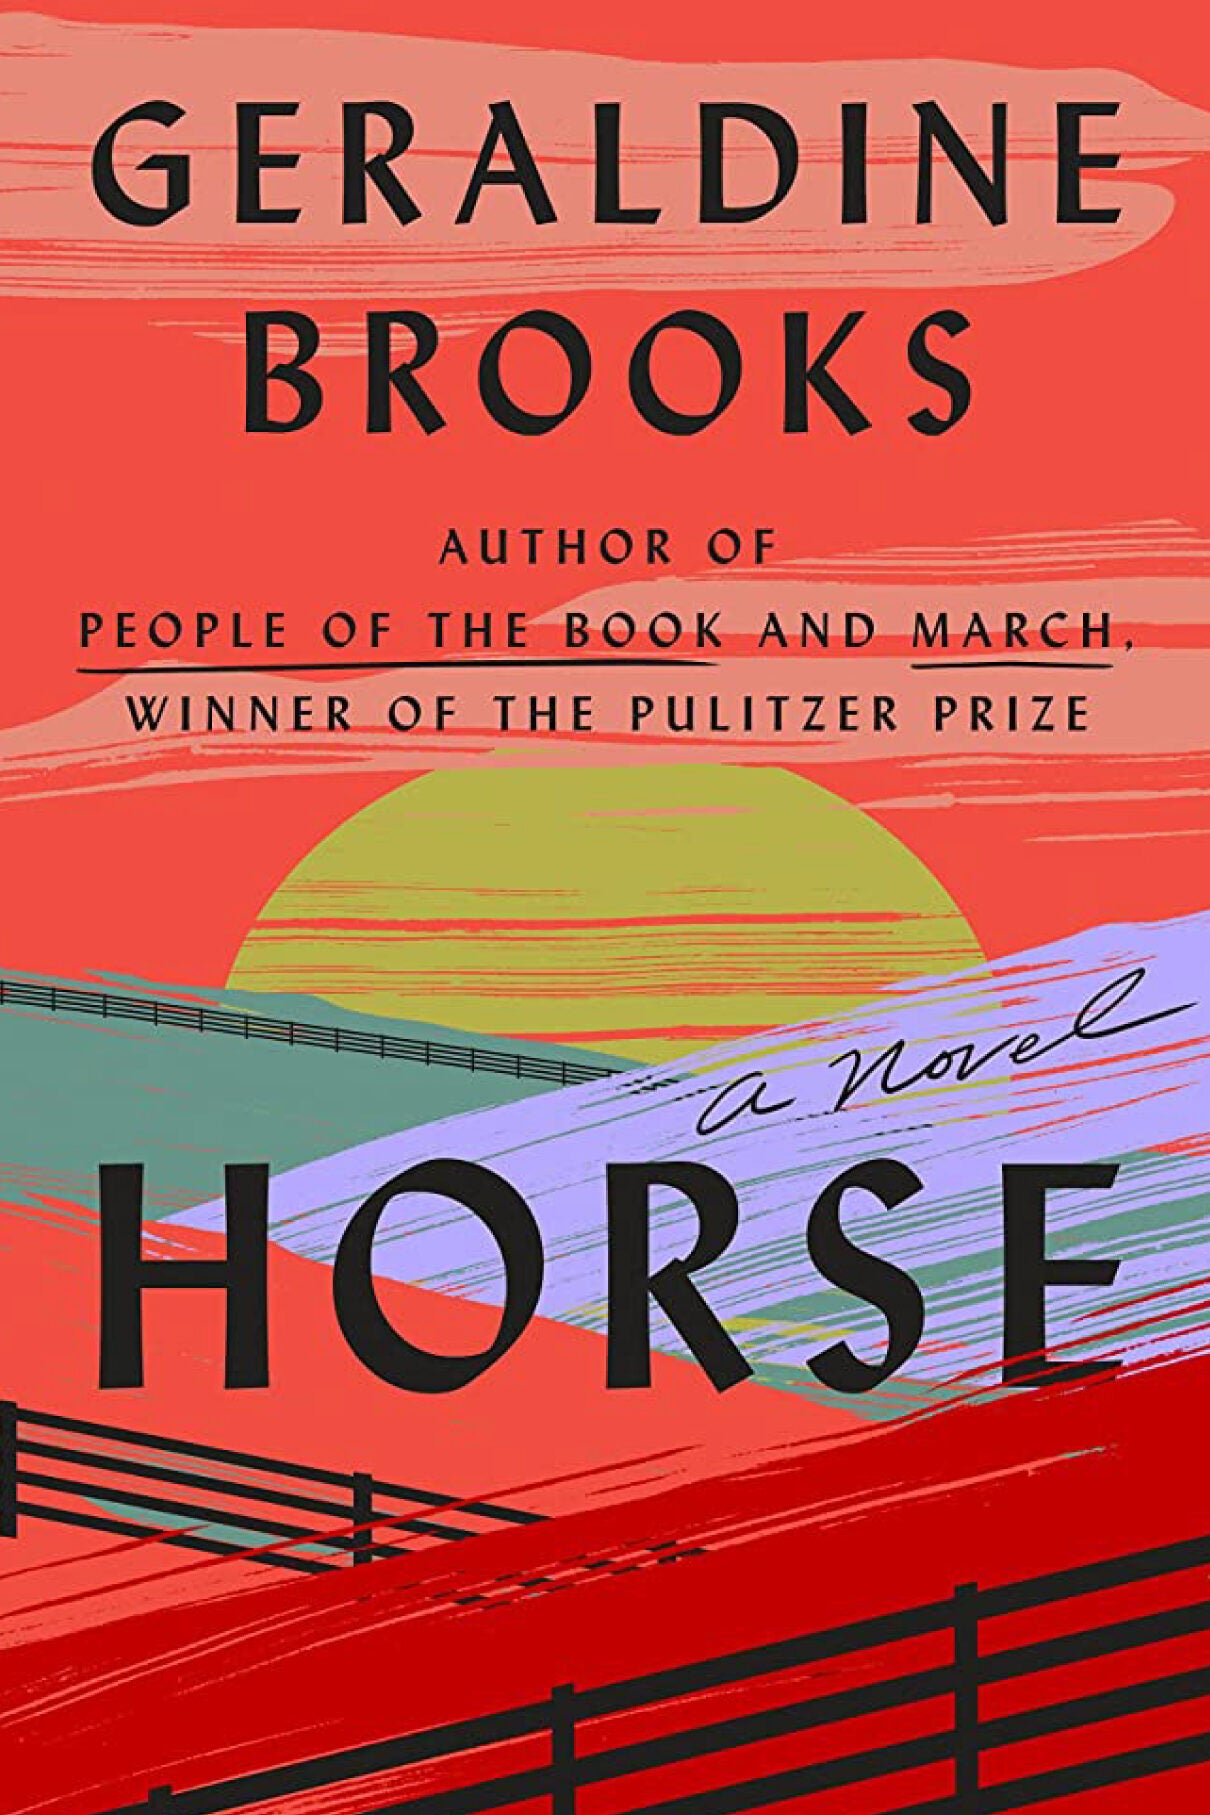 Book cover: "Horse."